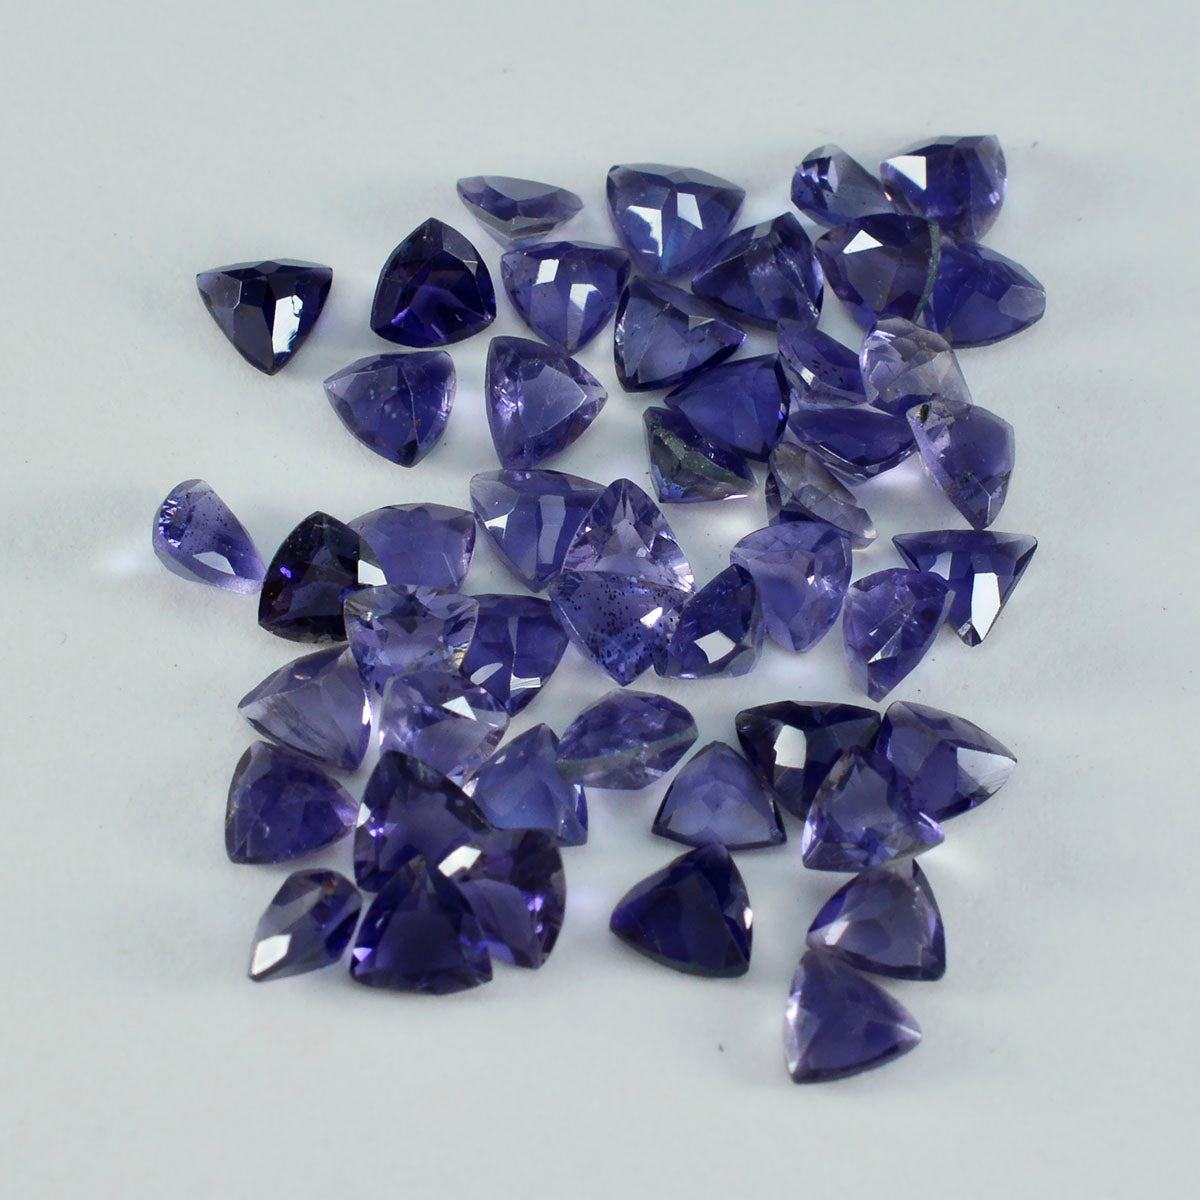 Riyogems 1PC Blue Iolite Faceted 6x6 mm Trillion Shape excellent Quality Loose Stone